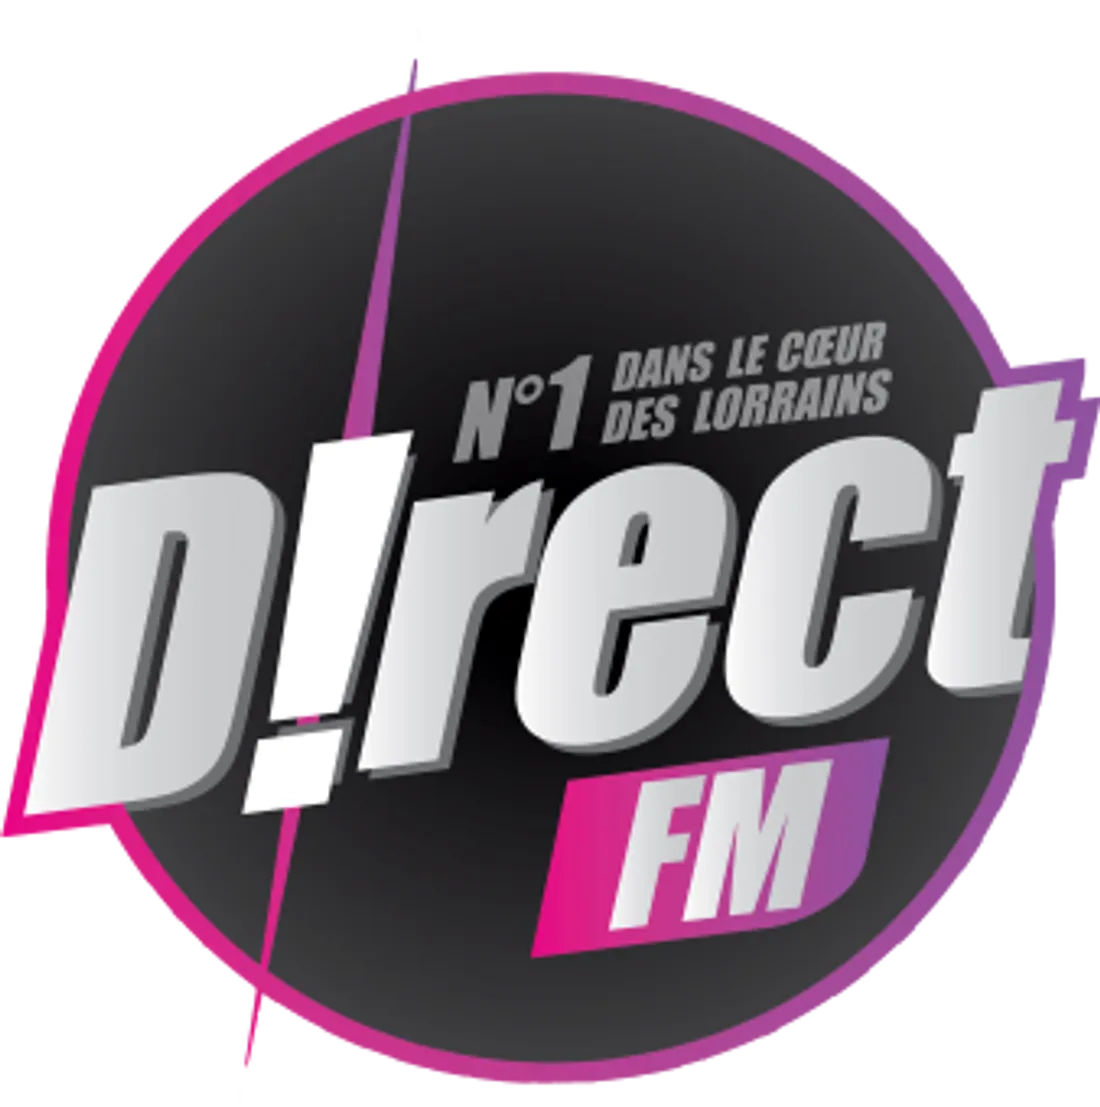 DIRECT FM